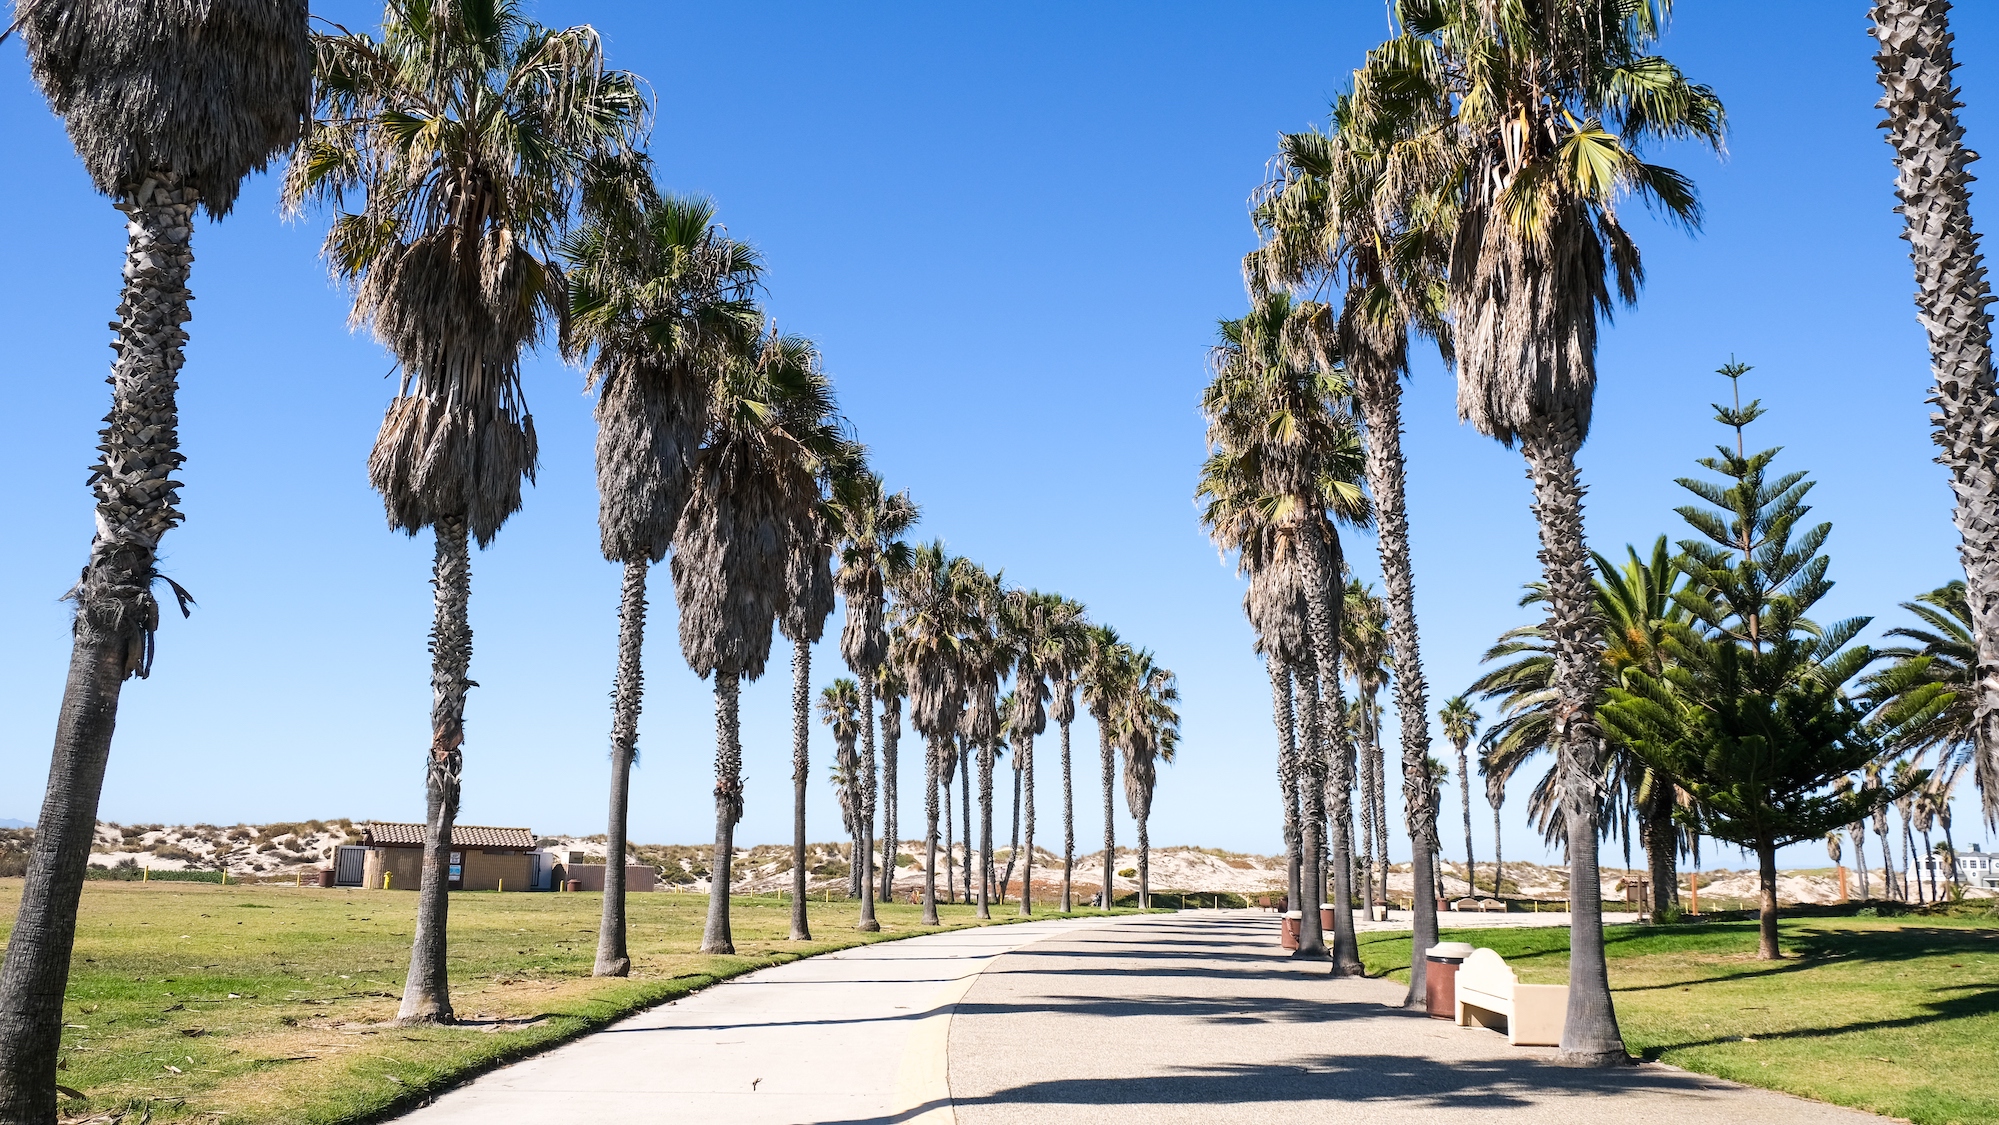 Palm tree lined walkway at Oxnard State Beach.